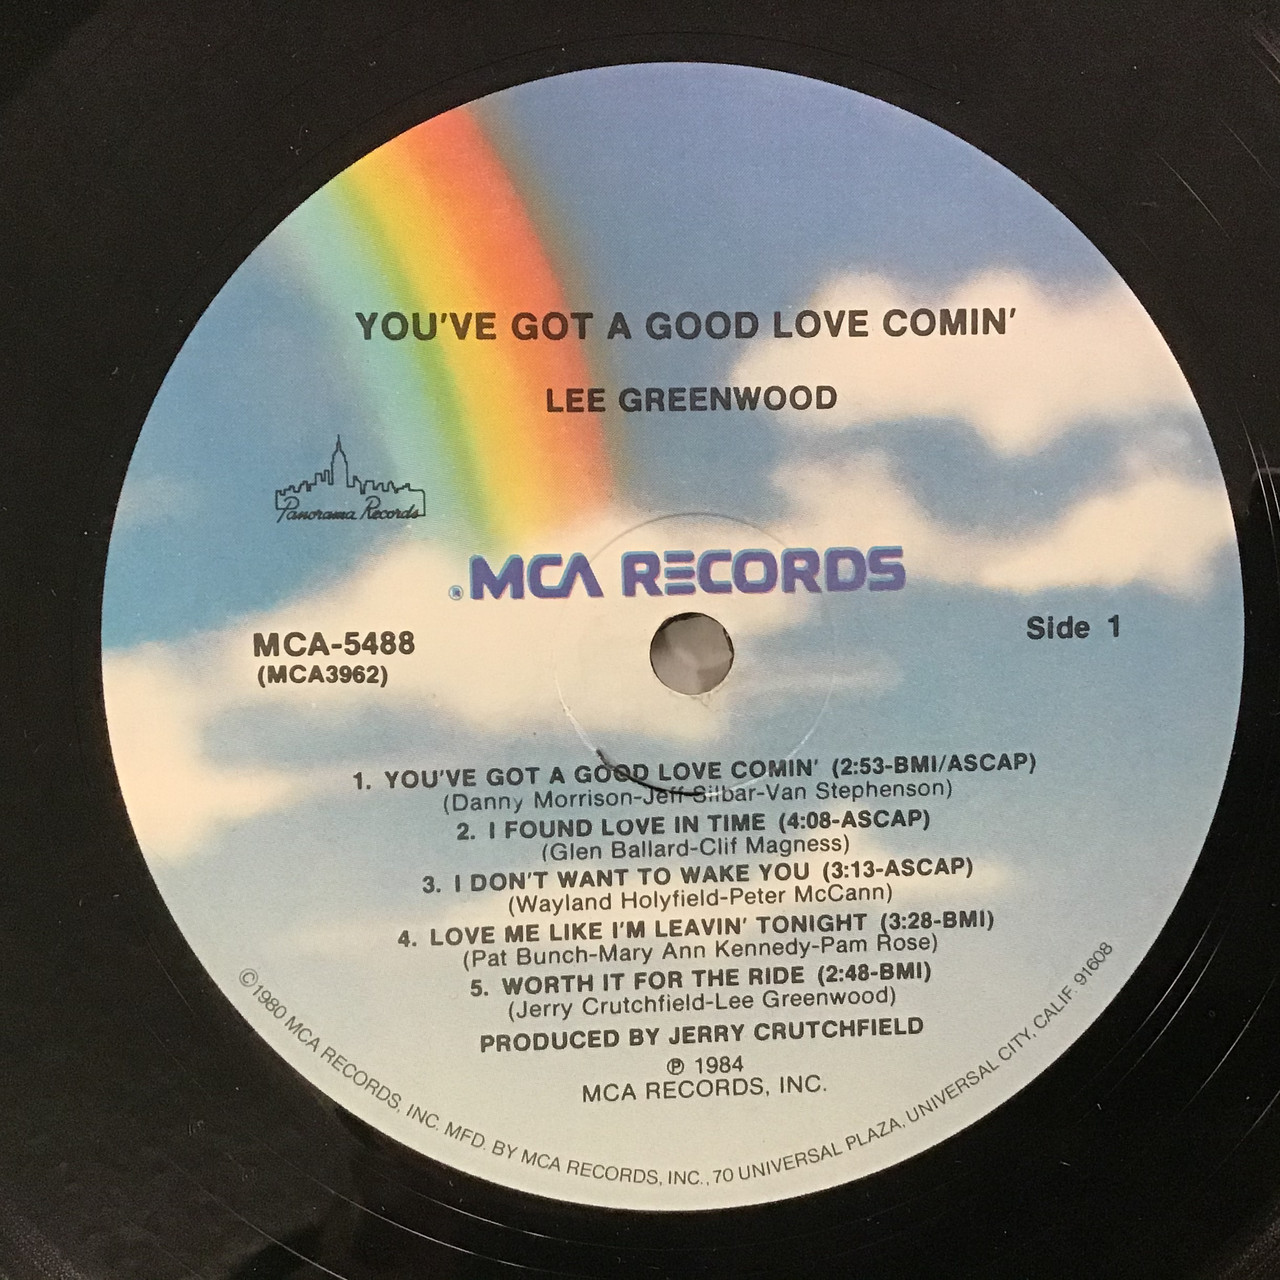 Lee Greenwood - You've Got a Good Love Comin' - vinyl record LP